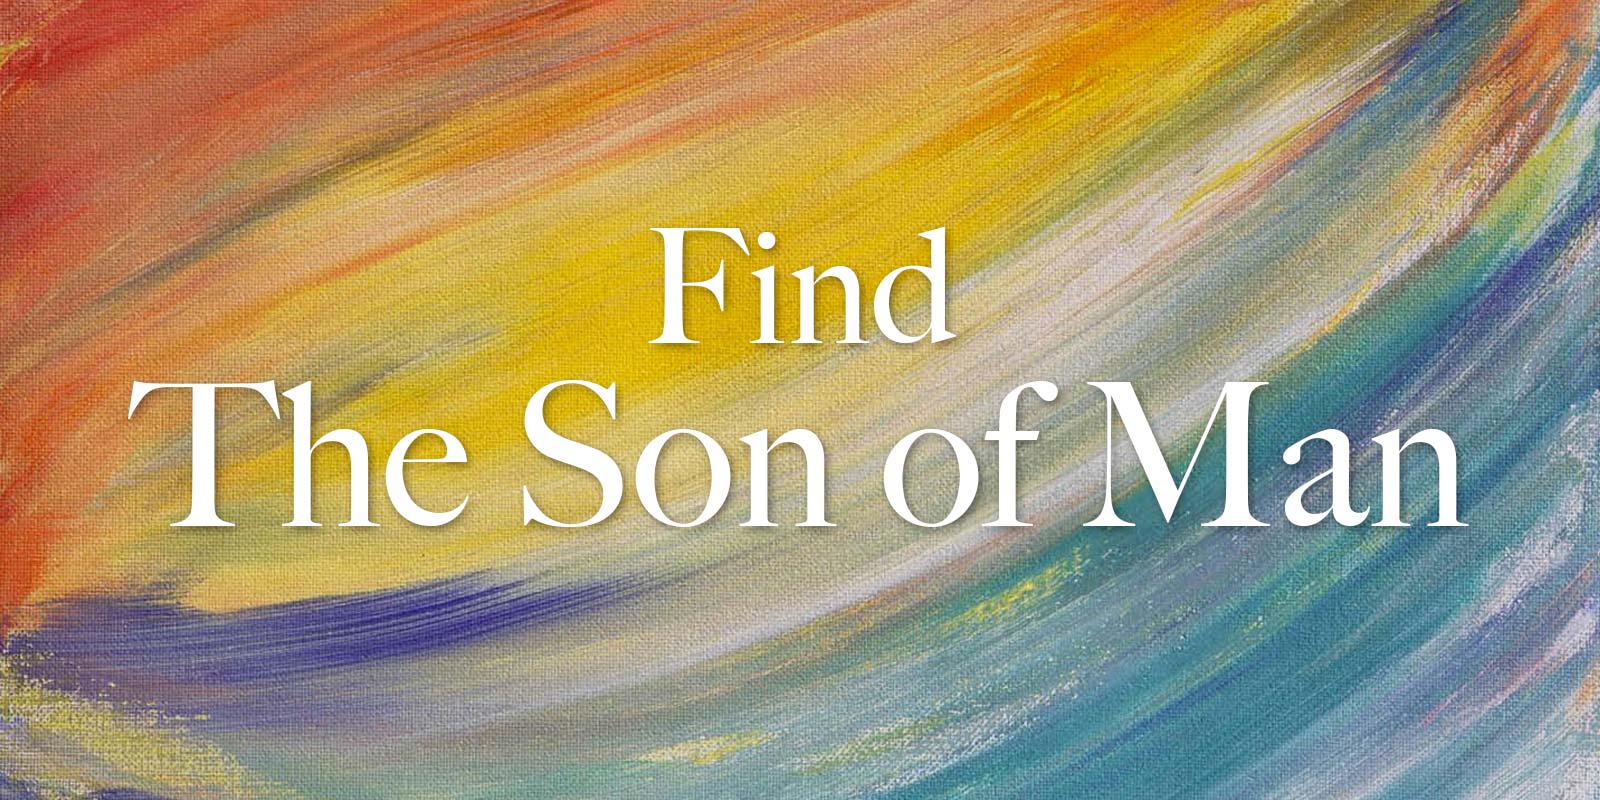 Famous Art Quiz The Son Of Man